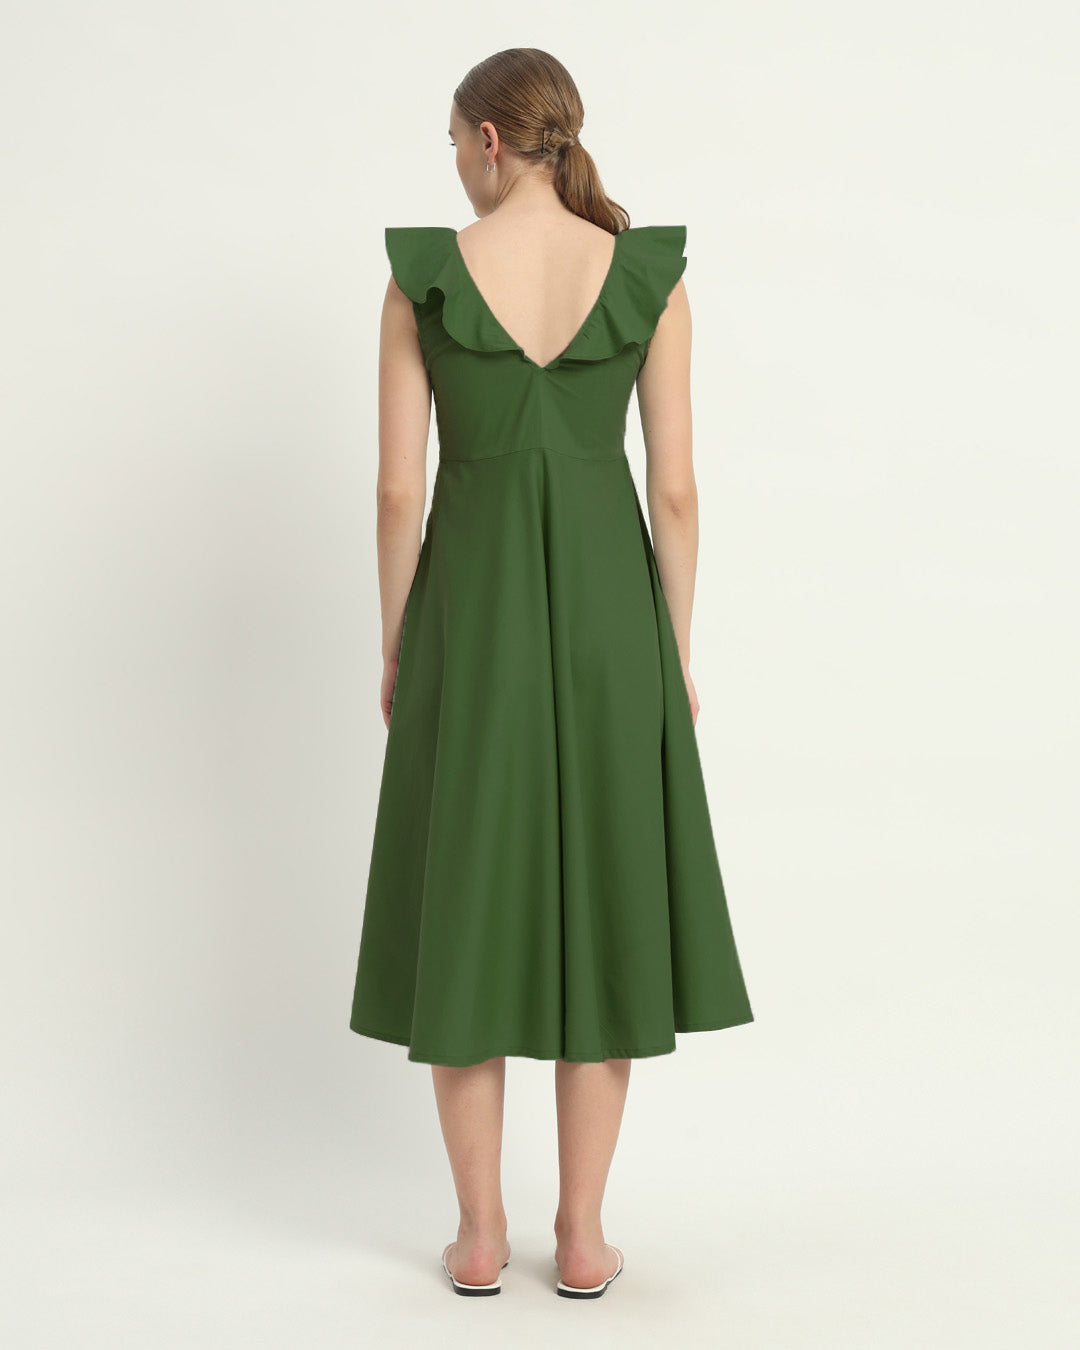 The Emerald Albany Cotton Dress